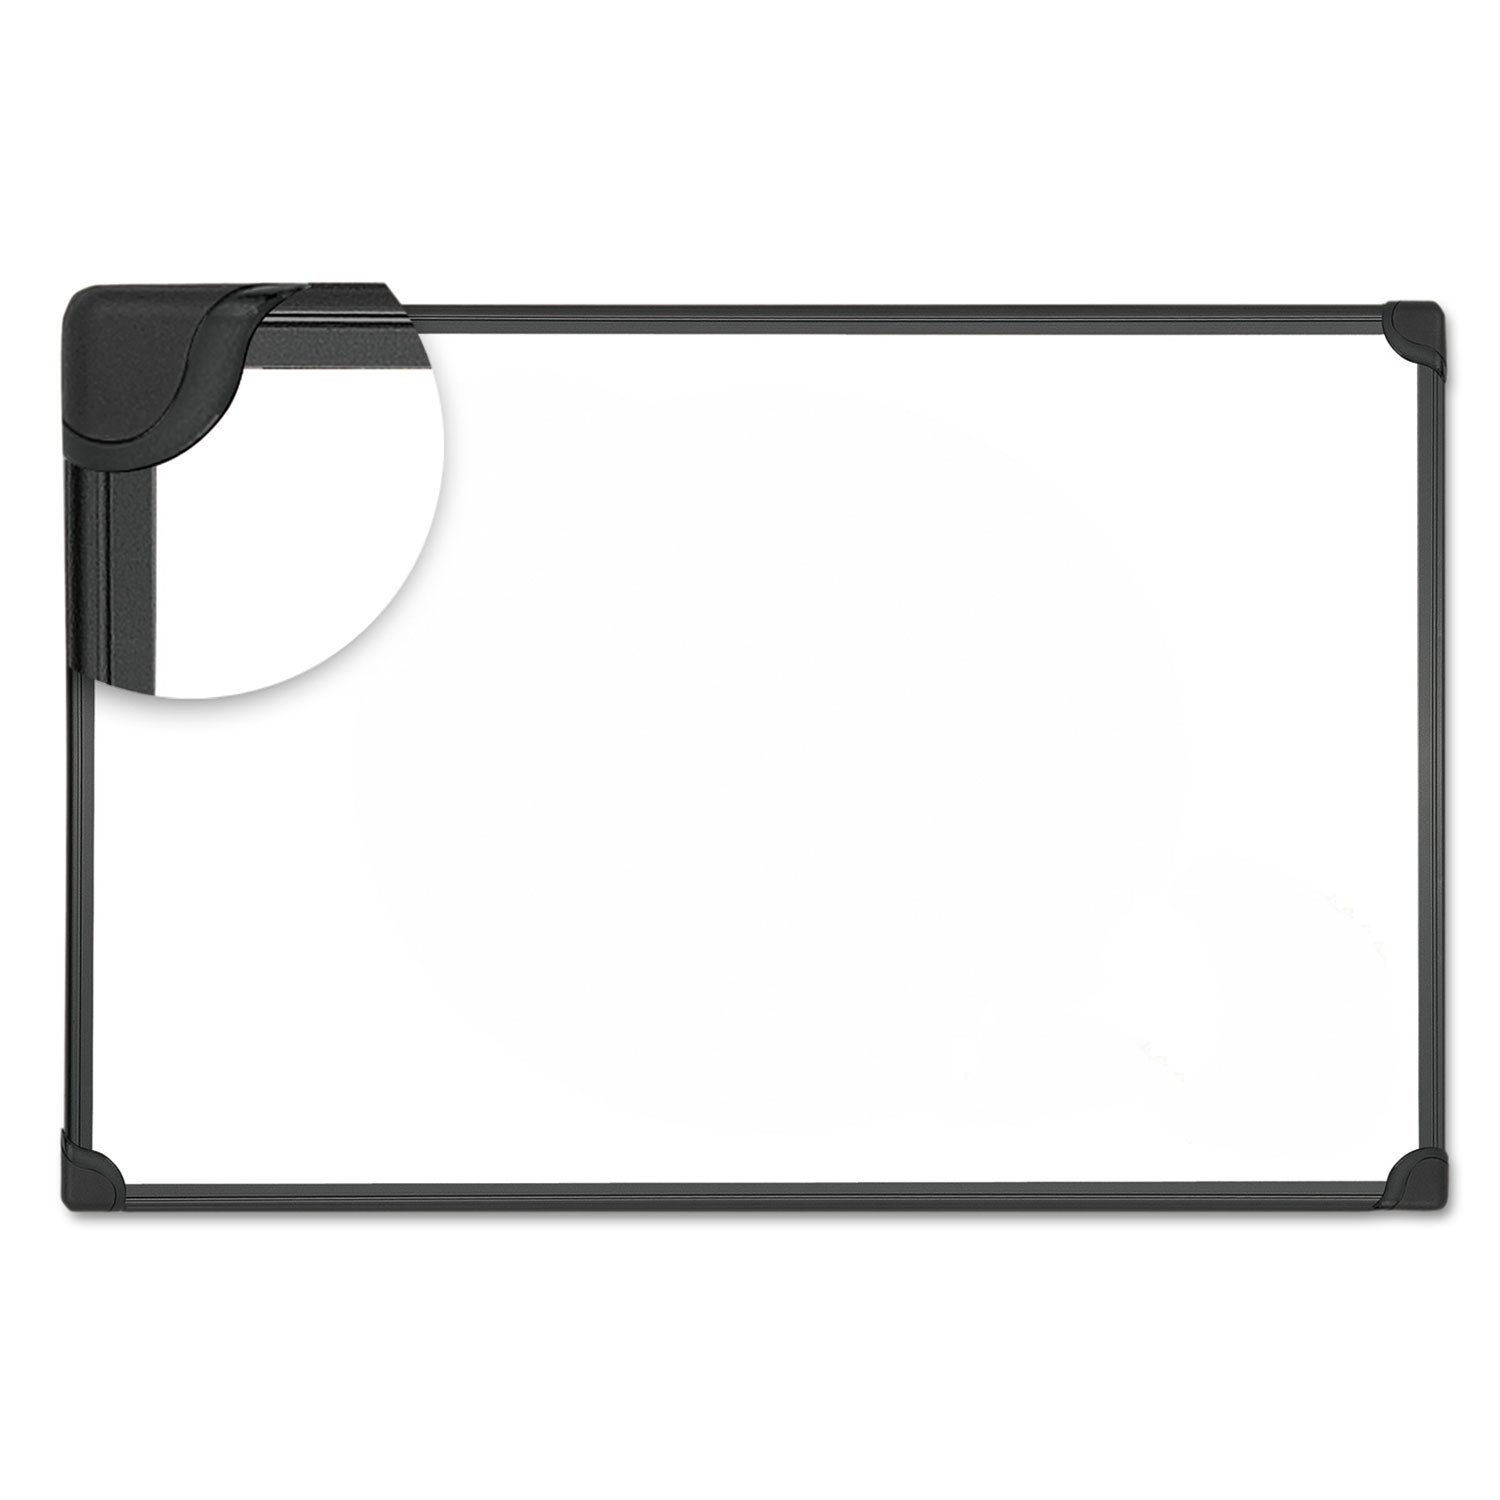 Design Series Magnetic Steel Dry Erase Board, 36 x 24, White, Black Frame